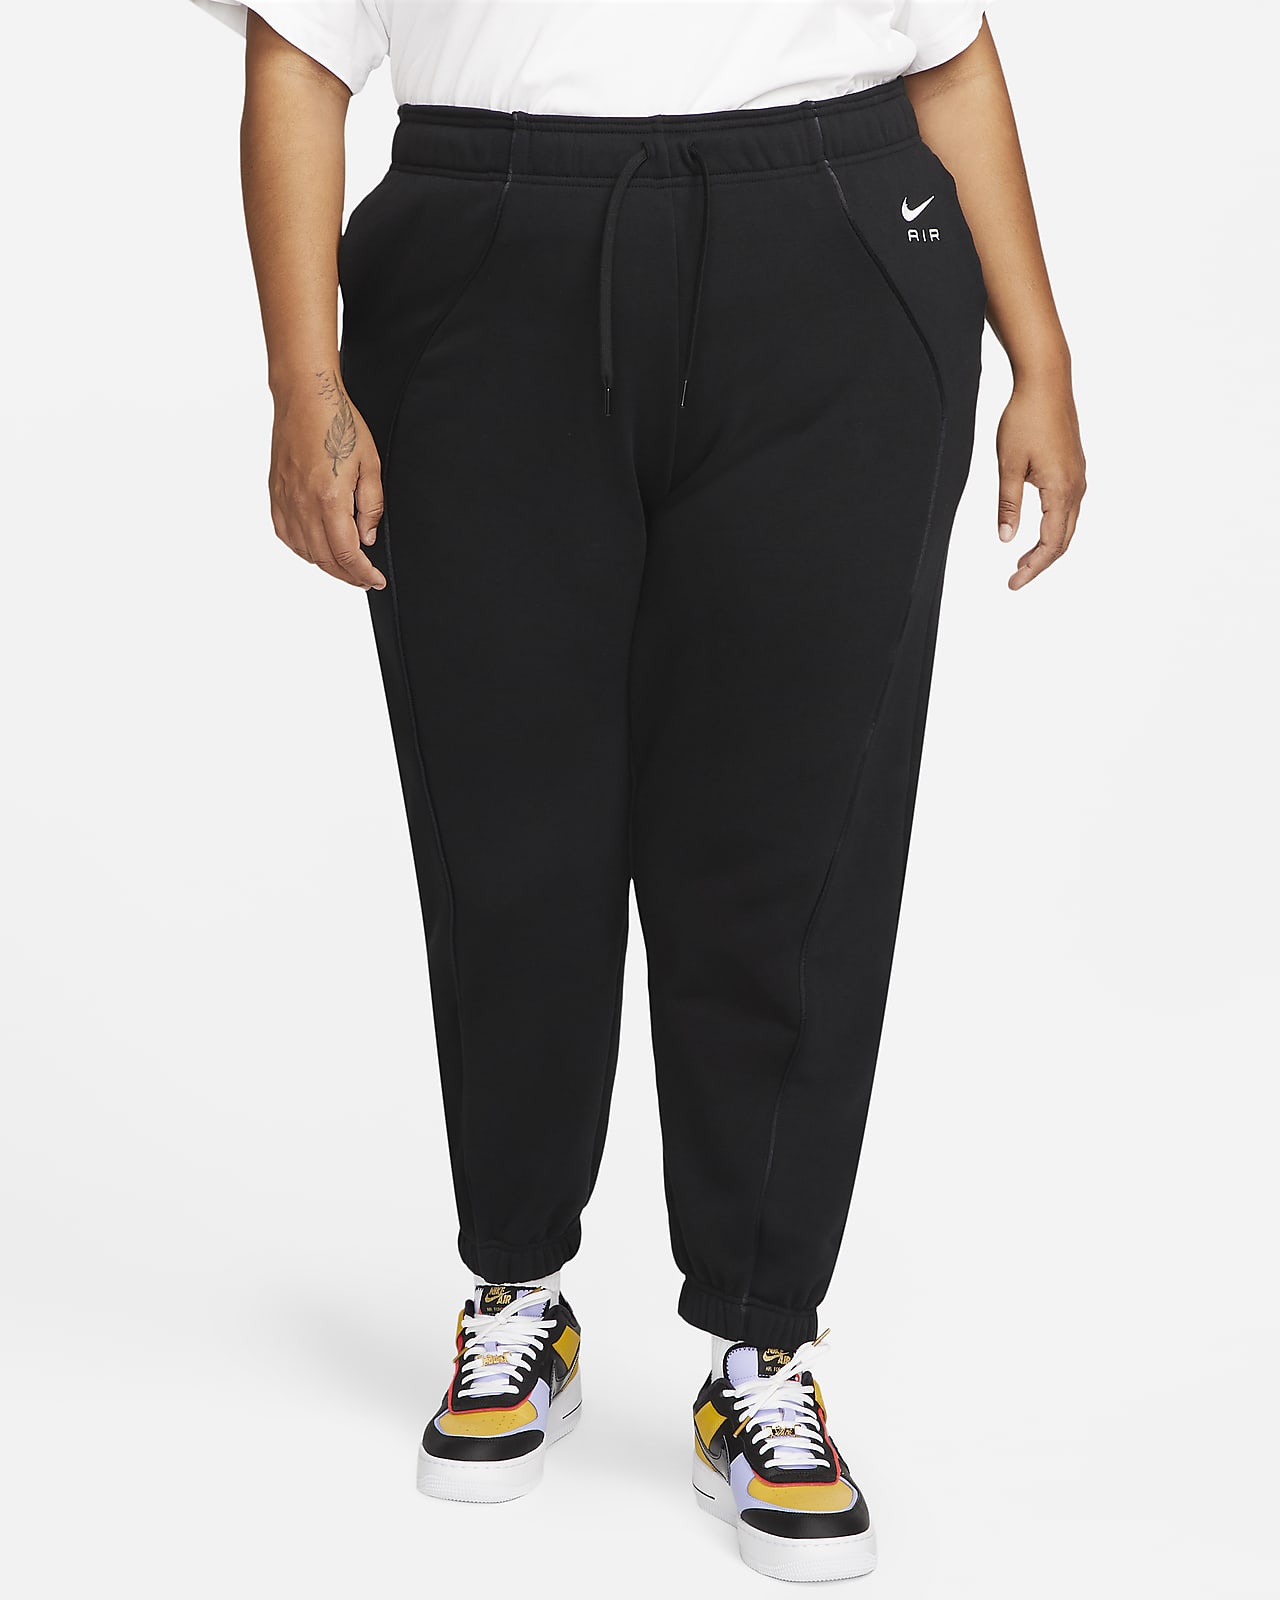 Nike Air Women's Mid-Rise Fleece Joggers (Plus Size). Nike AU